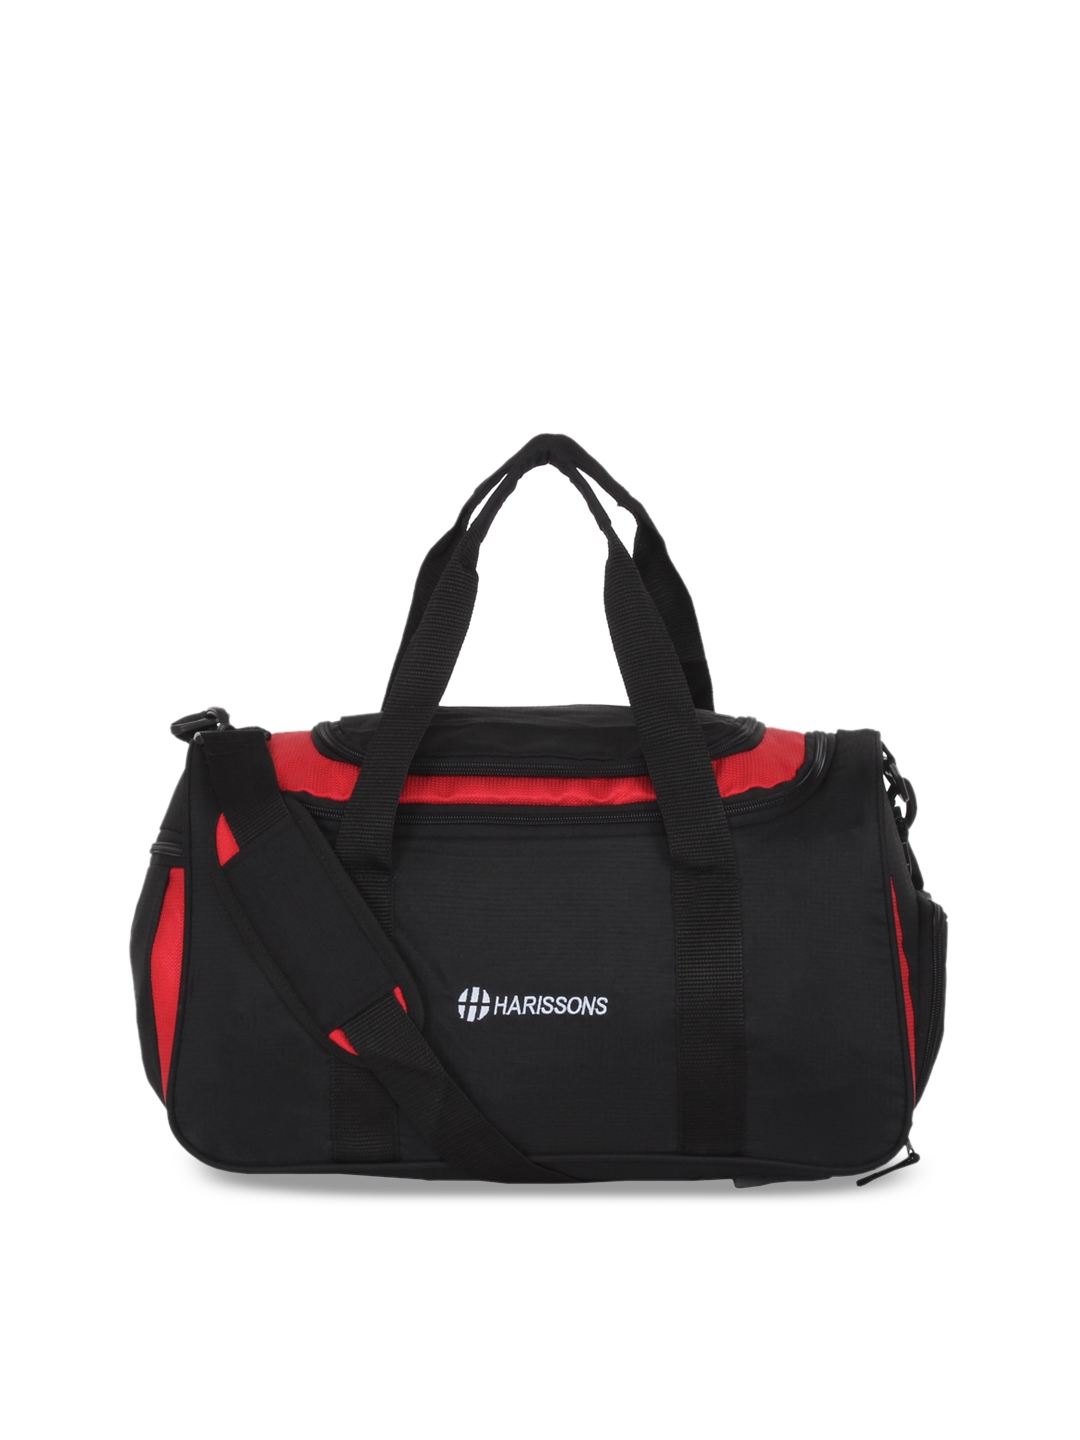 Harissons Black   Red Printed Duffle Bags